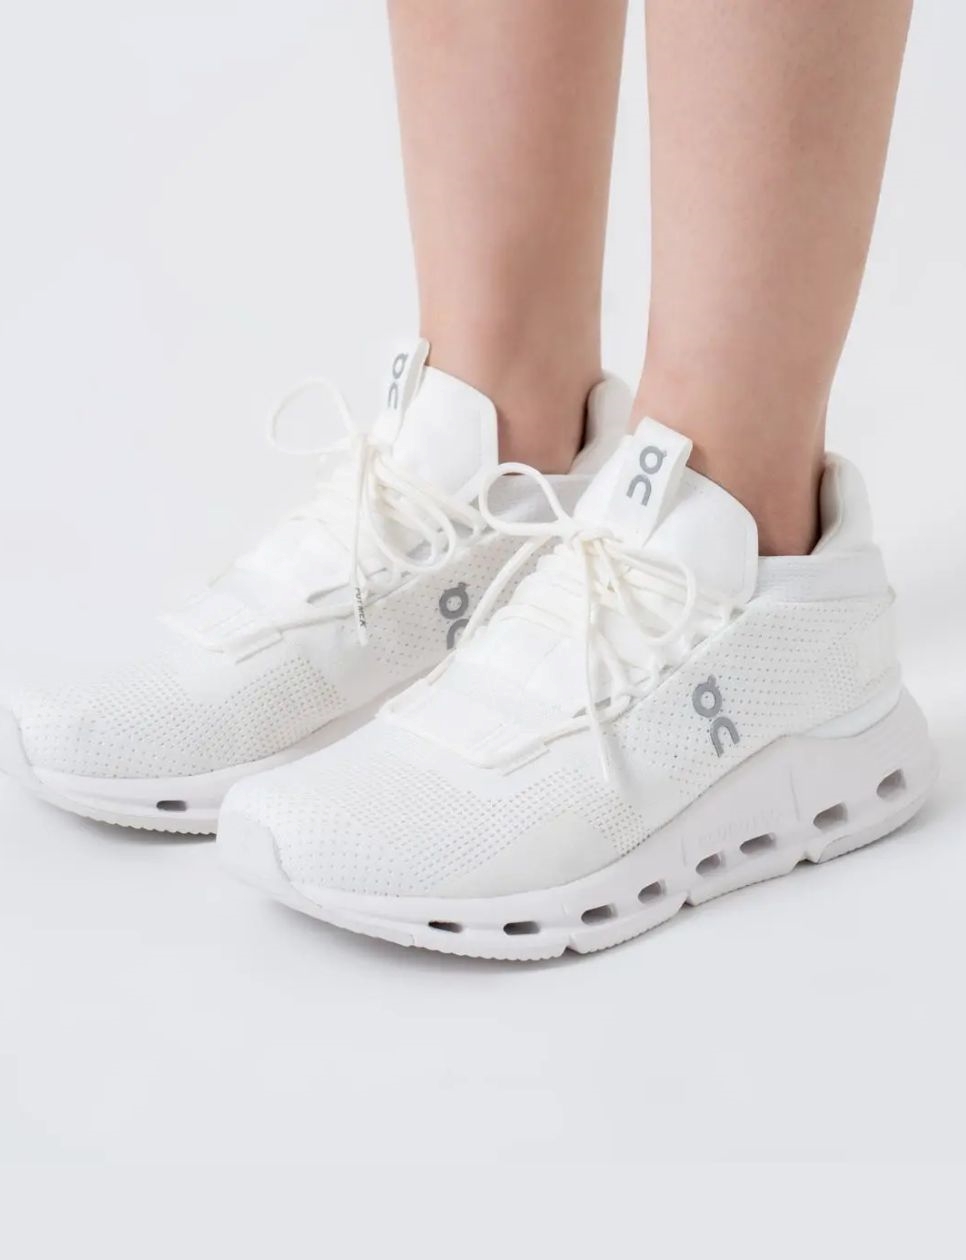 ON Cloudnova Running Sneakers Undyed White Women